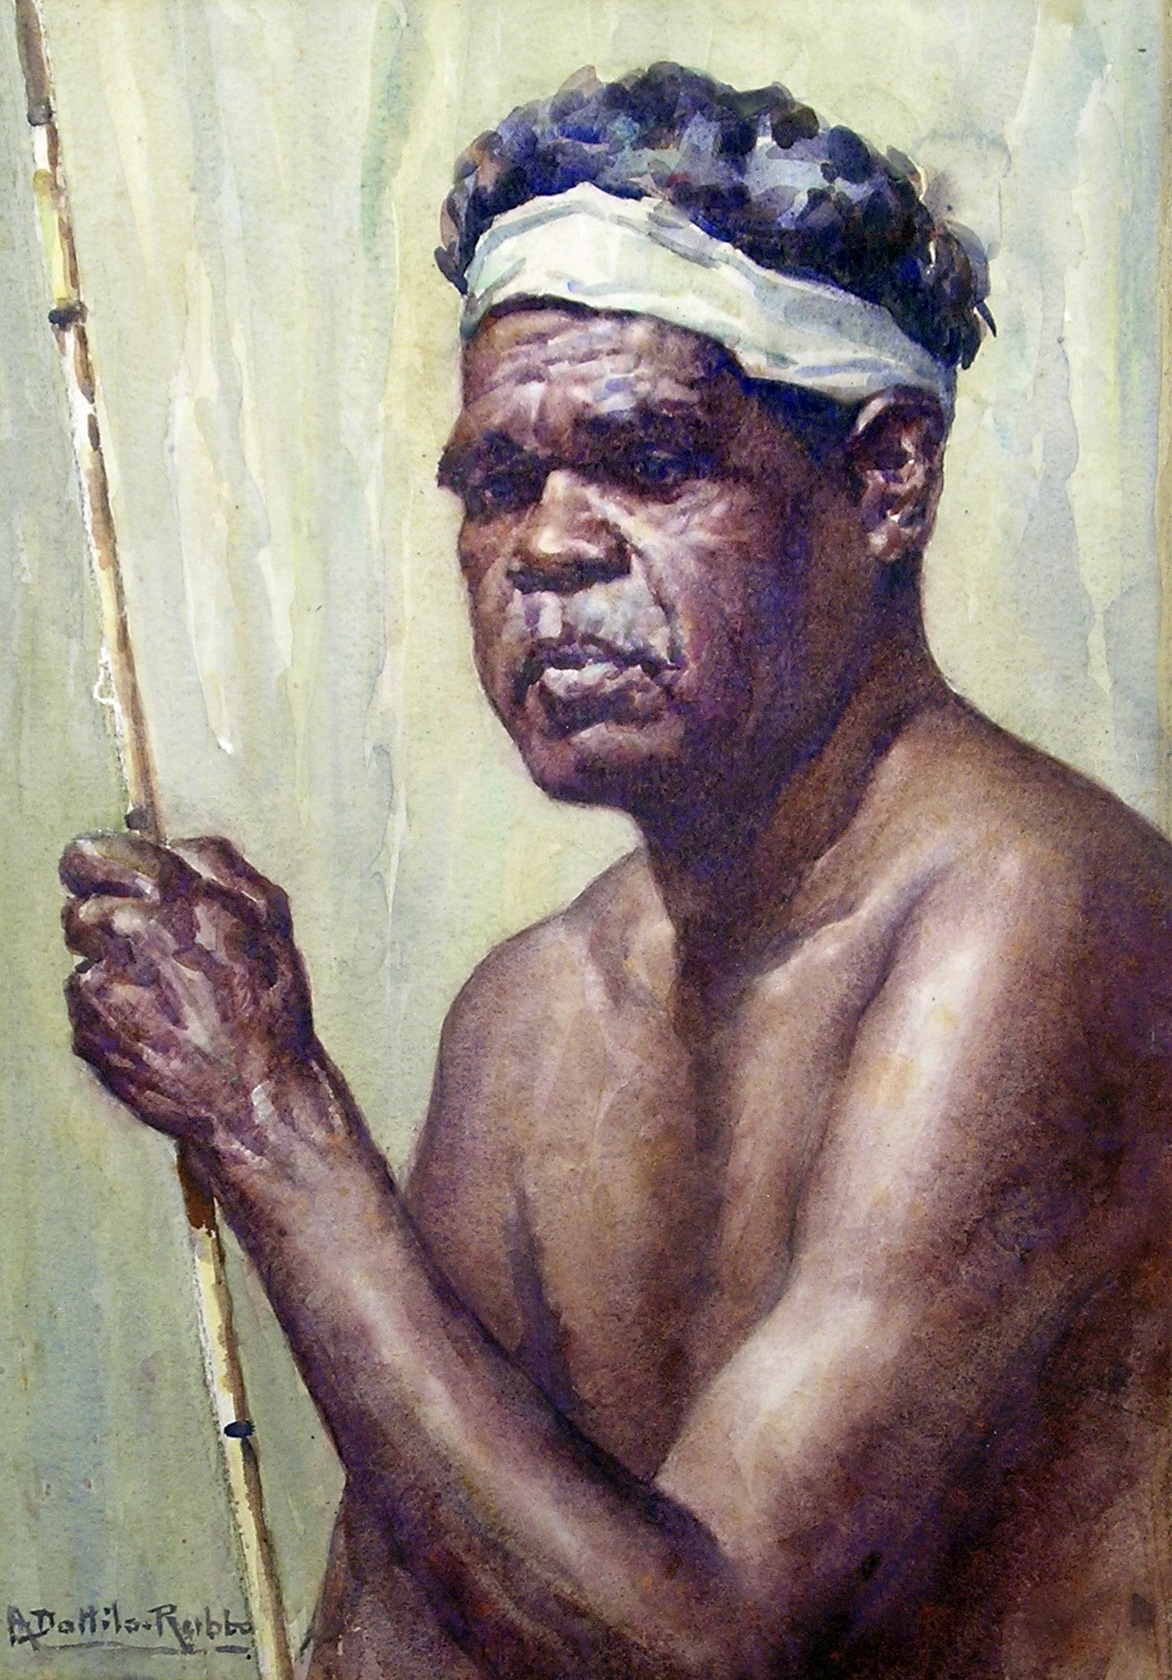 Anthony_Dattilo-Rubbo_Australian_Aboriginal_59_x_39cm_Gift_of_the_artist_1940.jpg